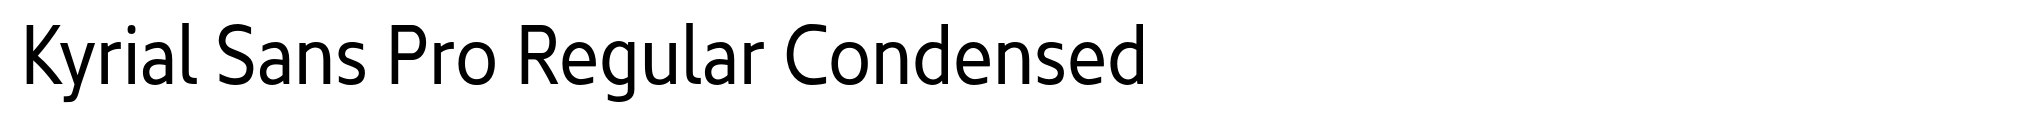 Kyrial Sans Pro Regular Condensed image